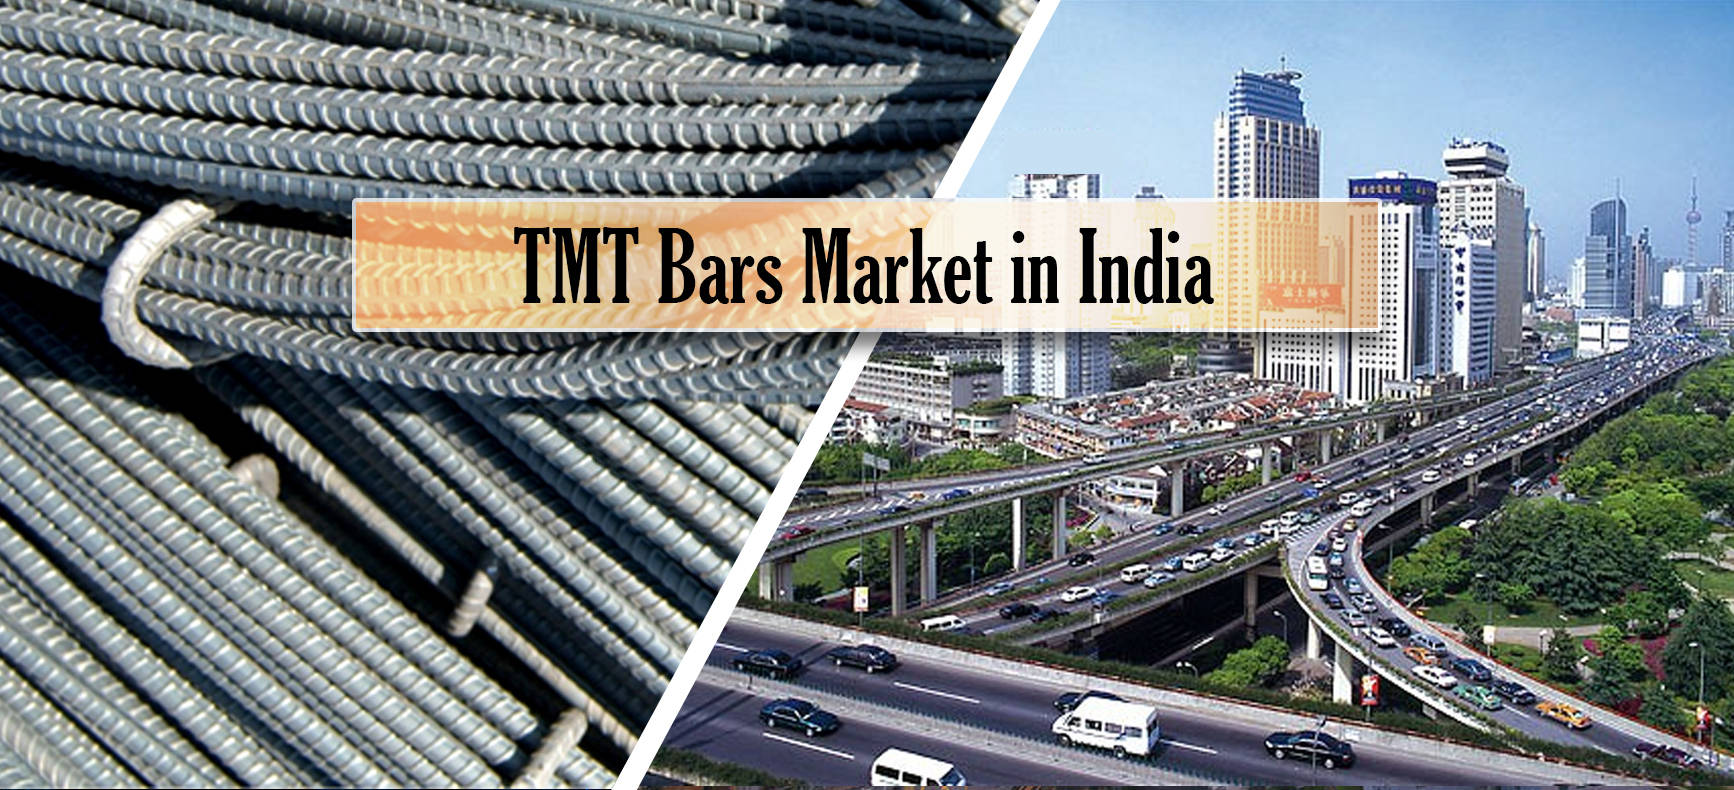 Top TMT Bar Brands in India